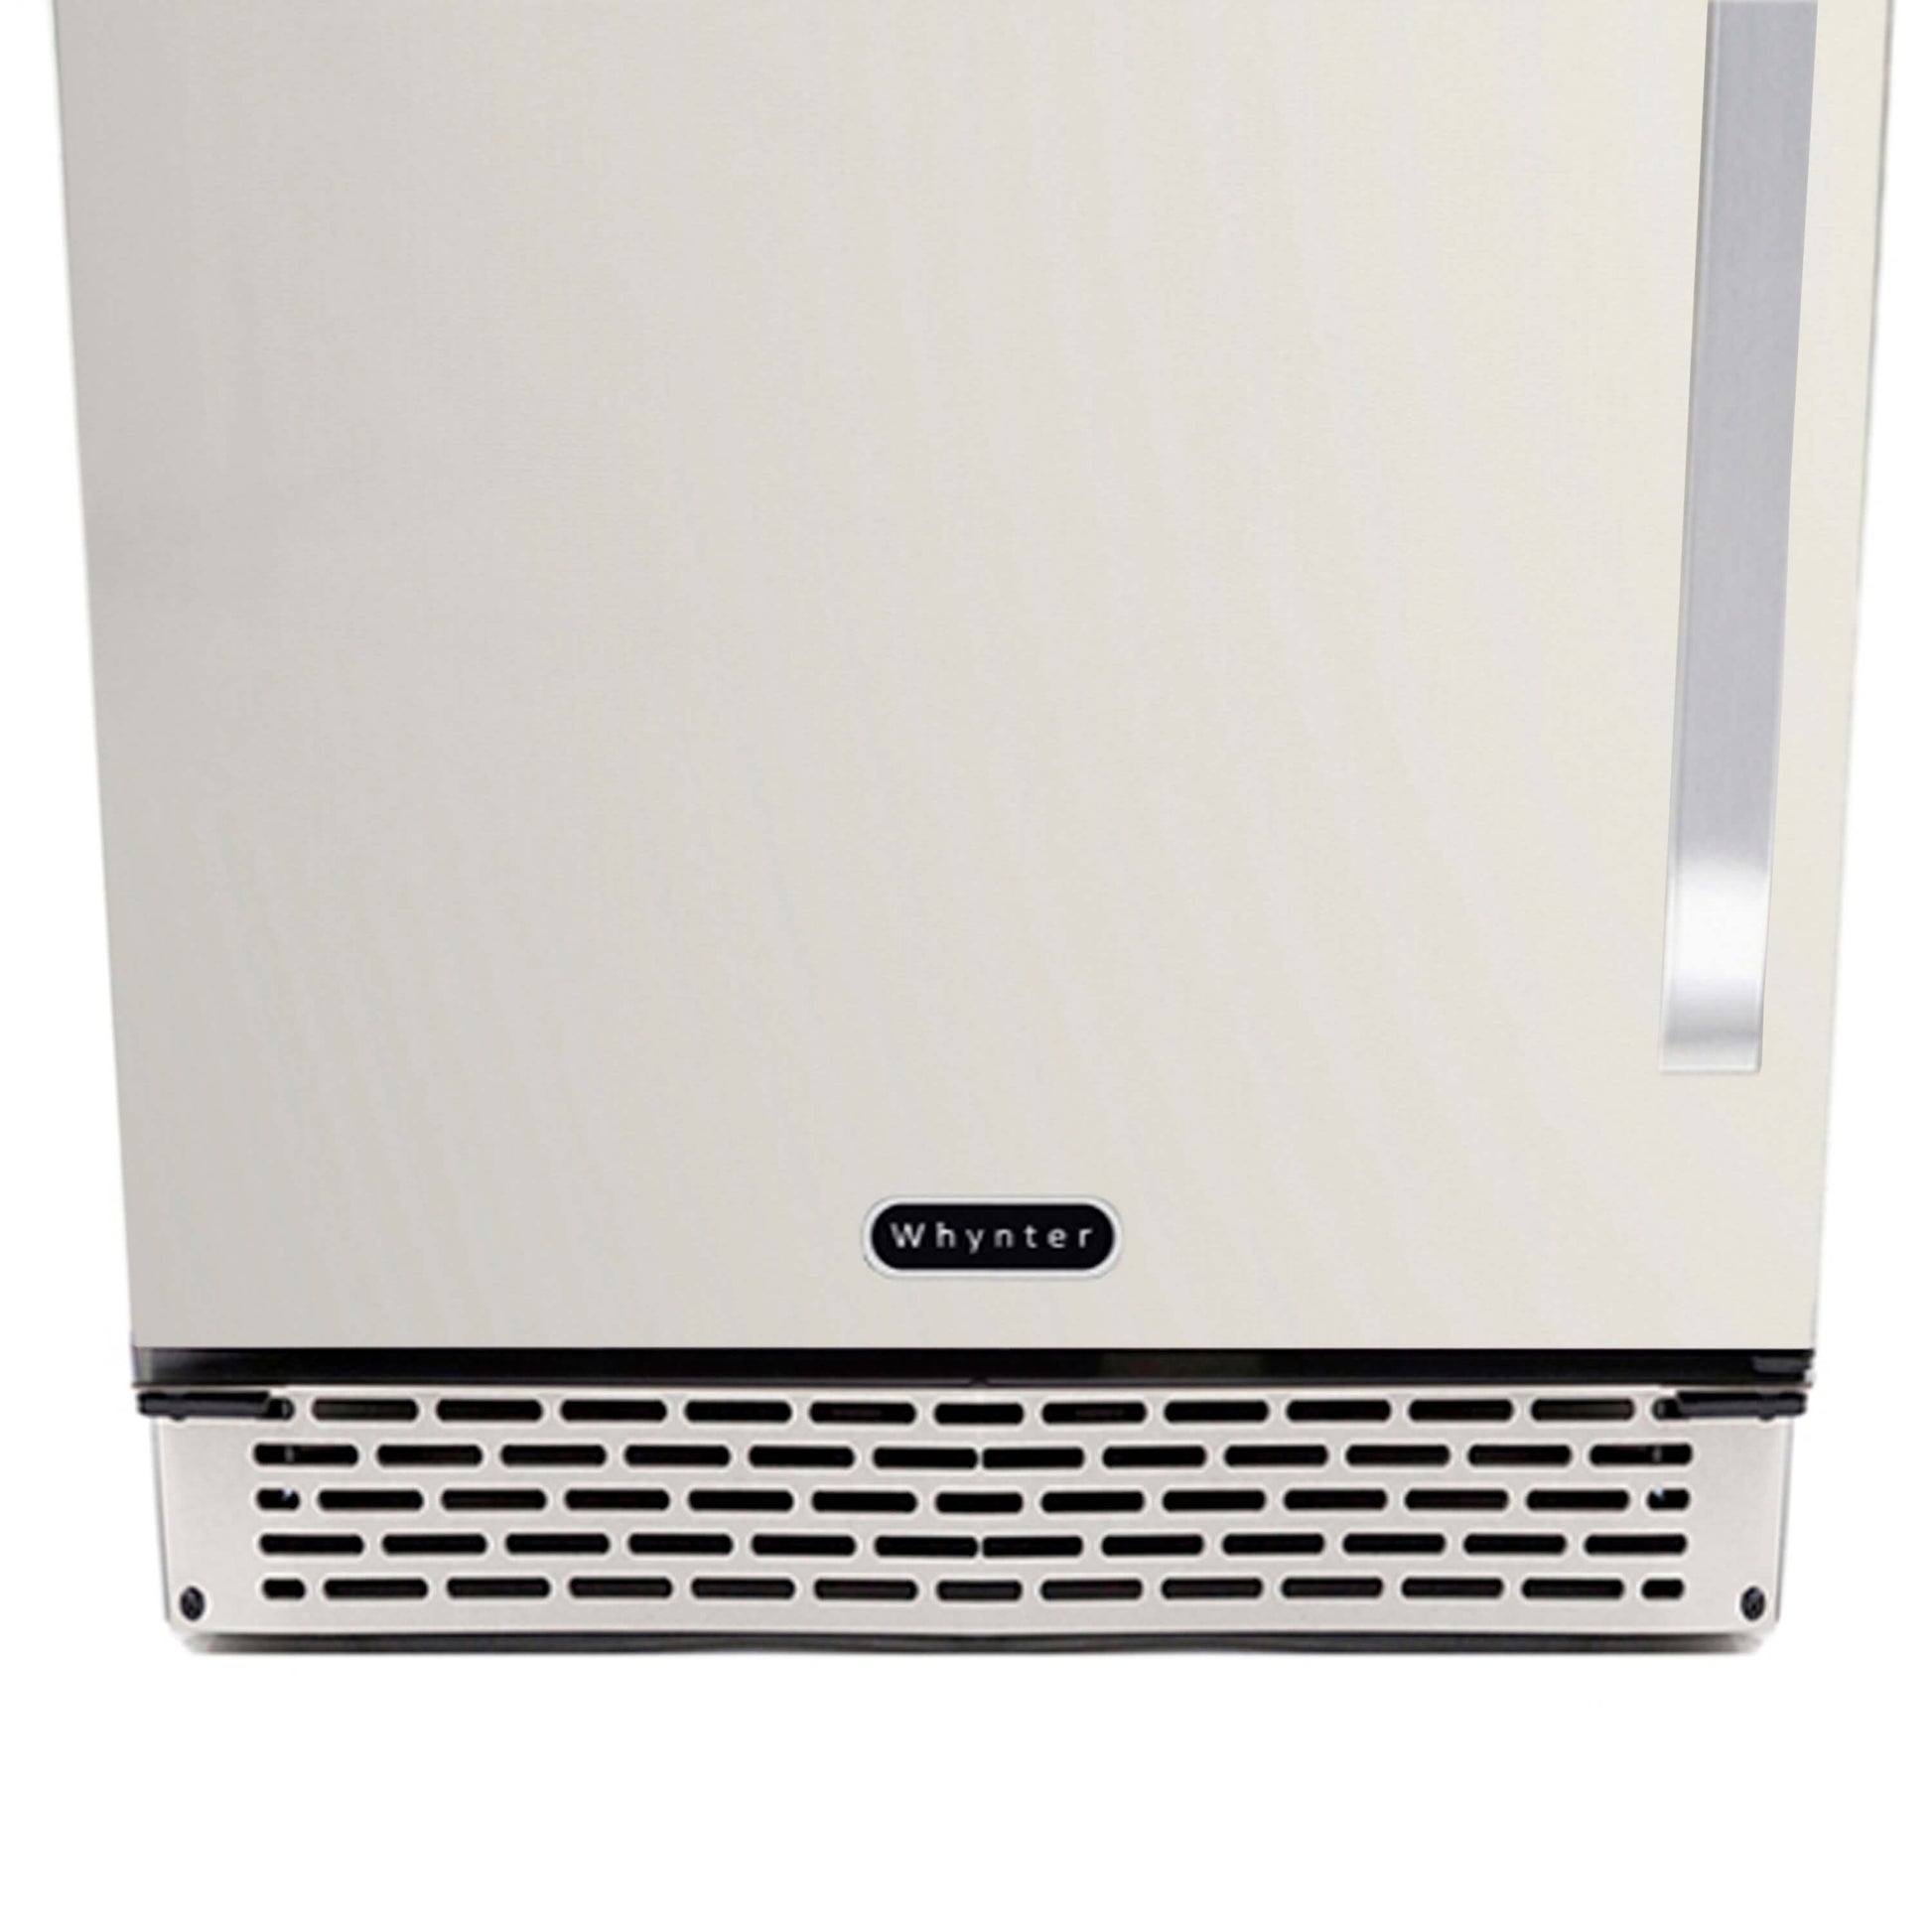 Whynter BOR-326FS Energy Star Stainless Steel 3.2 cu. ft. Indoor/Outdoor Beverage Refrigerator